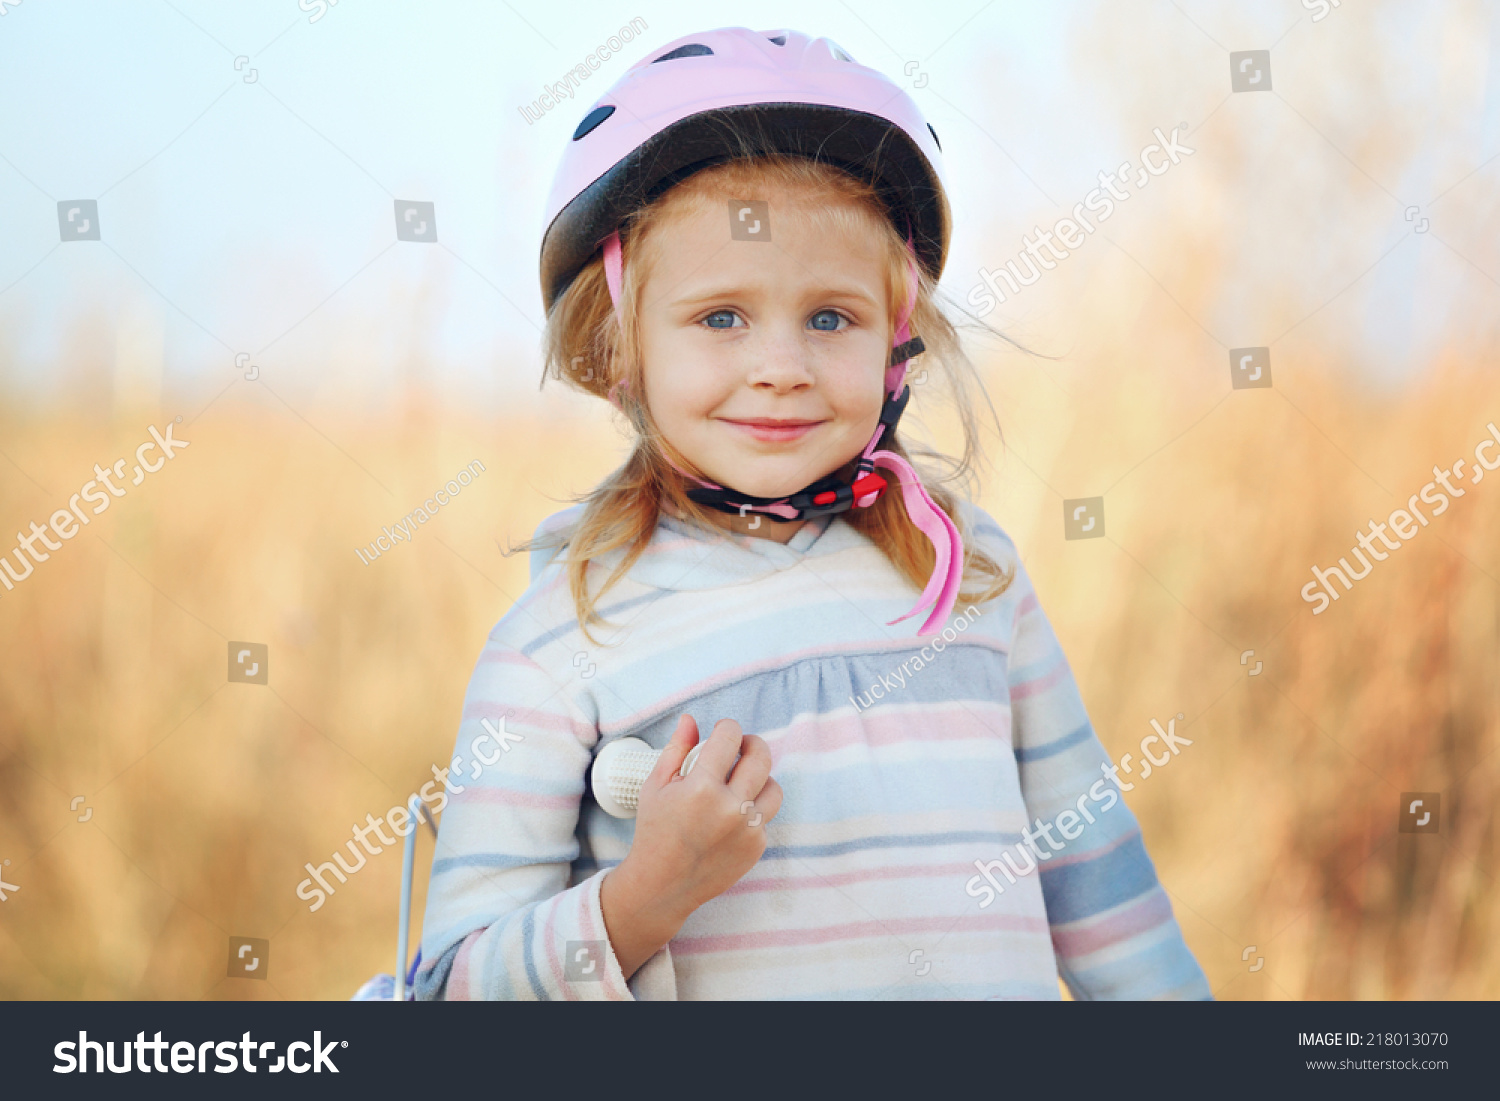 kid with helmet